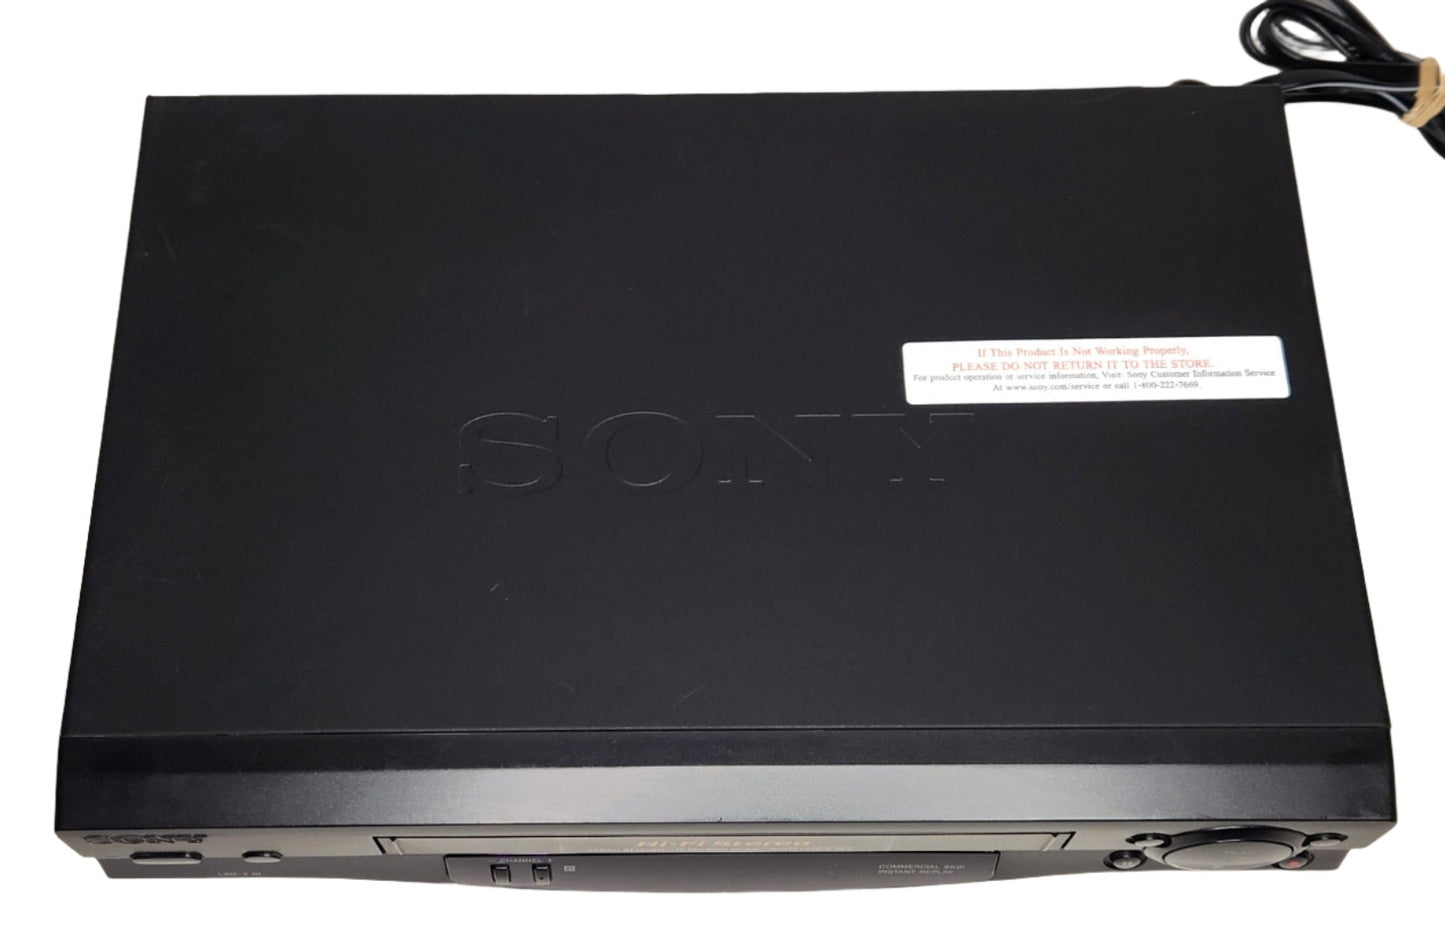 Sony SLV-N55 VCR, 4-Head Hi-Fi Stereo - Top